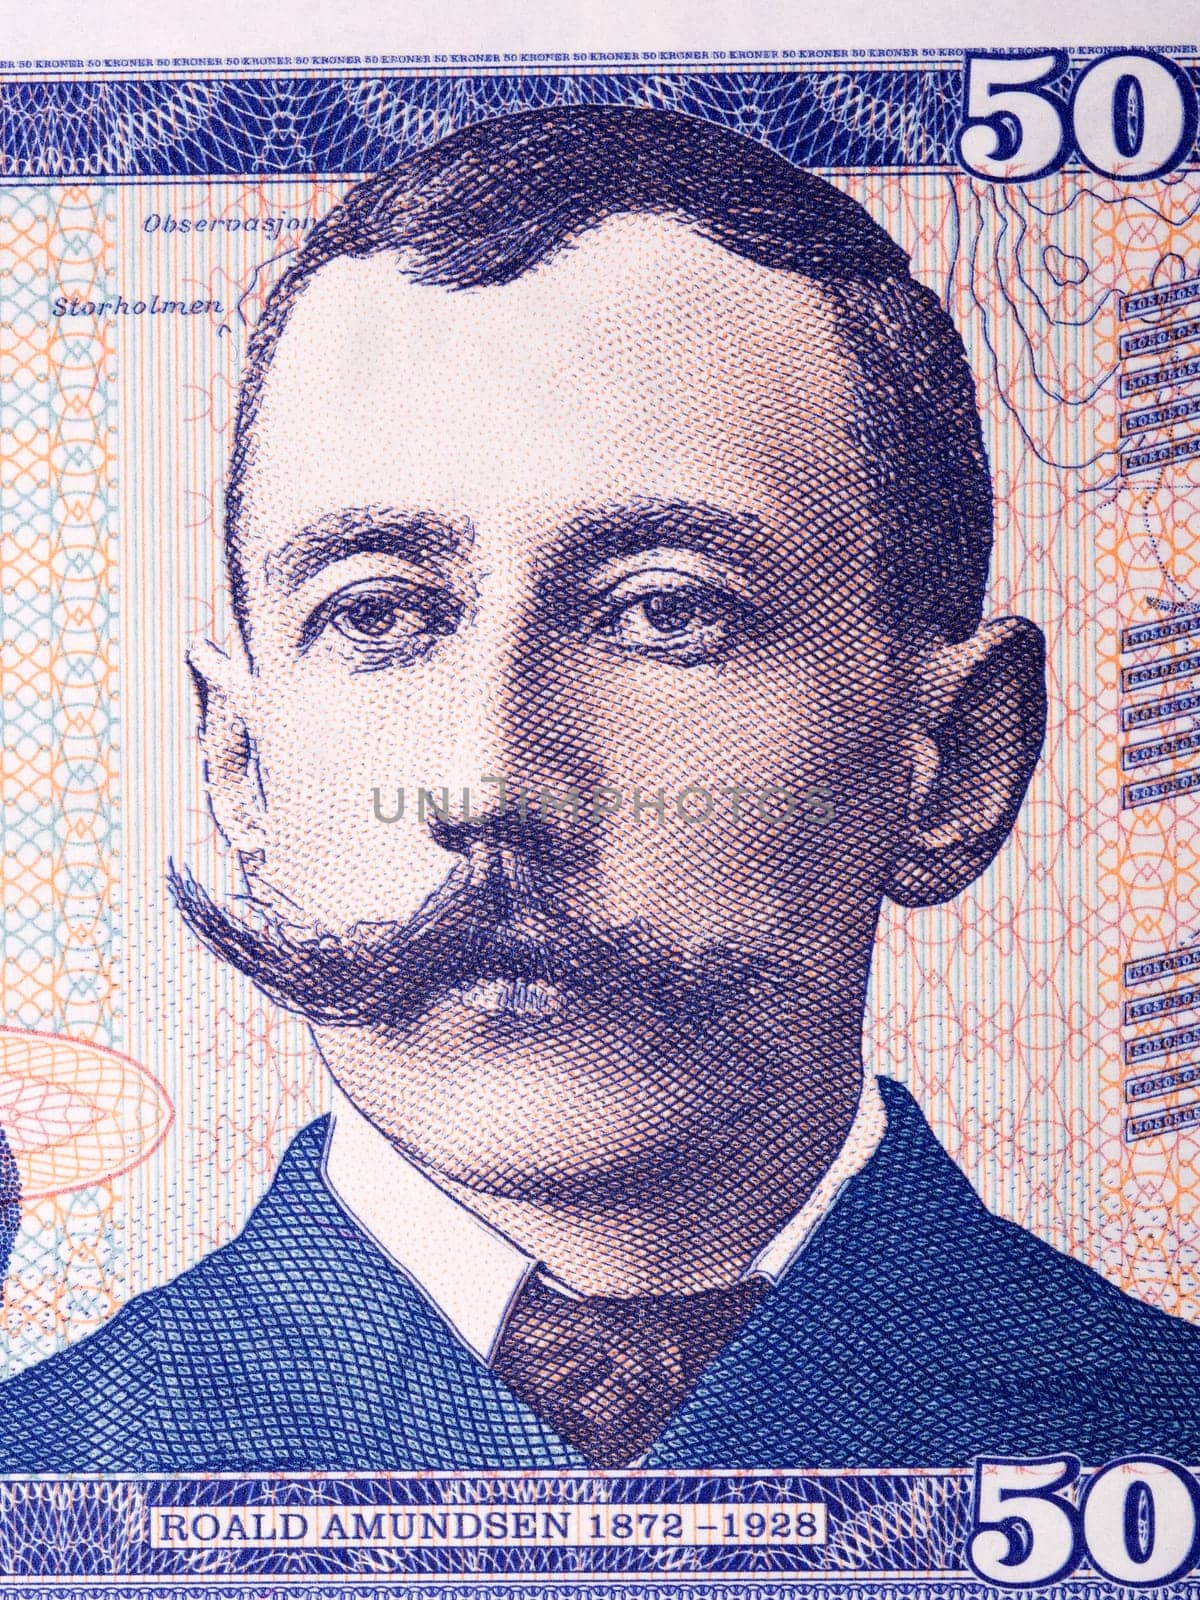 Roald Amundsen a portrait from Norwegian money by johan10